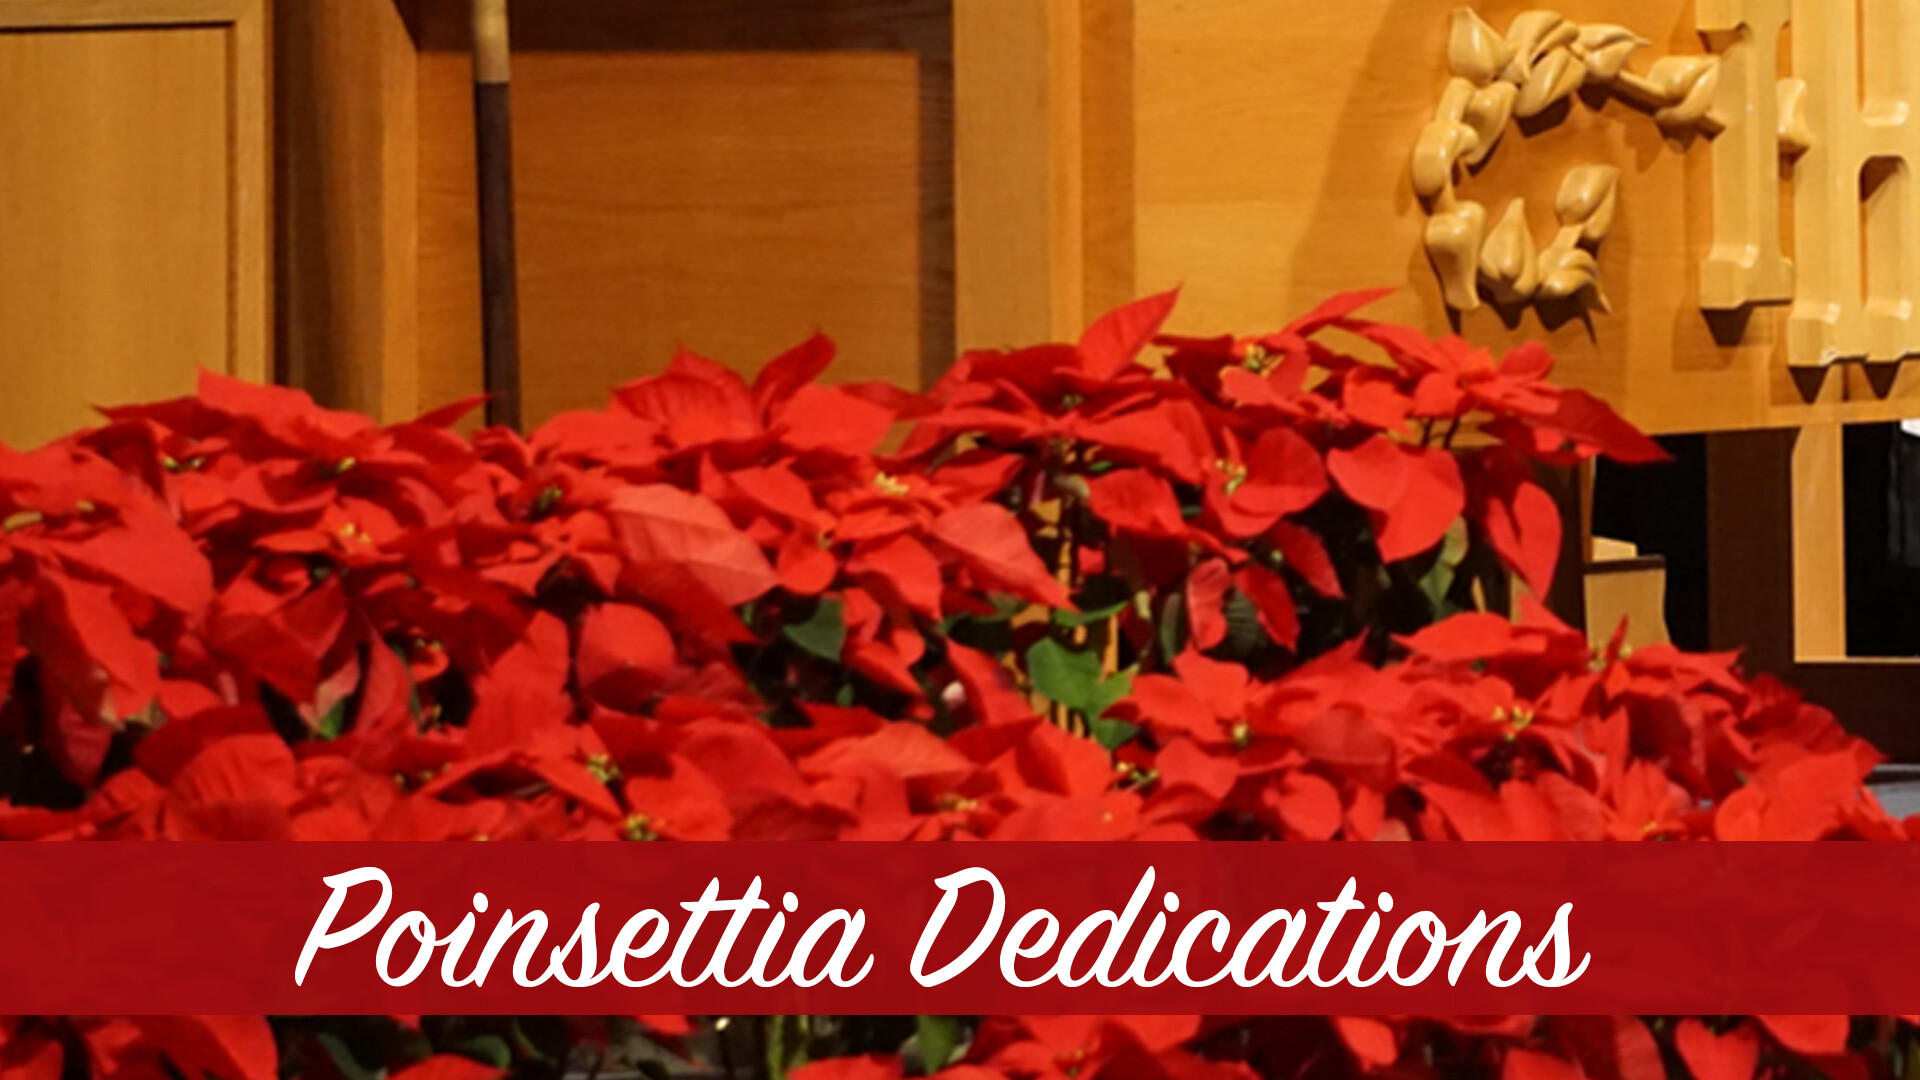 Poinsettia Dedications